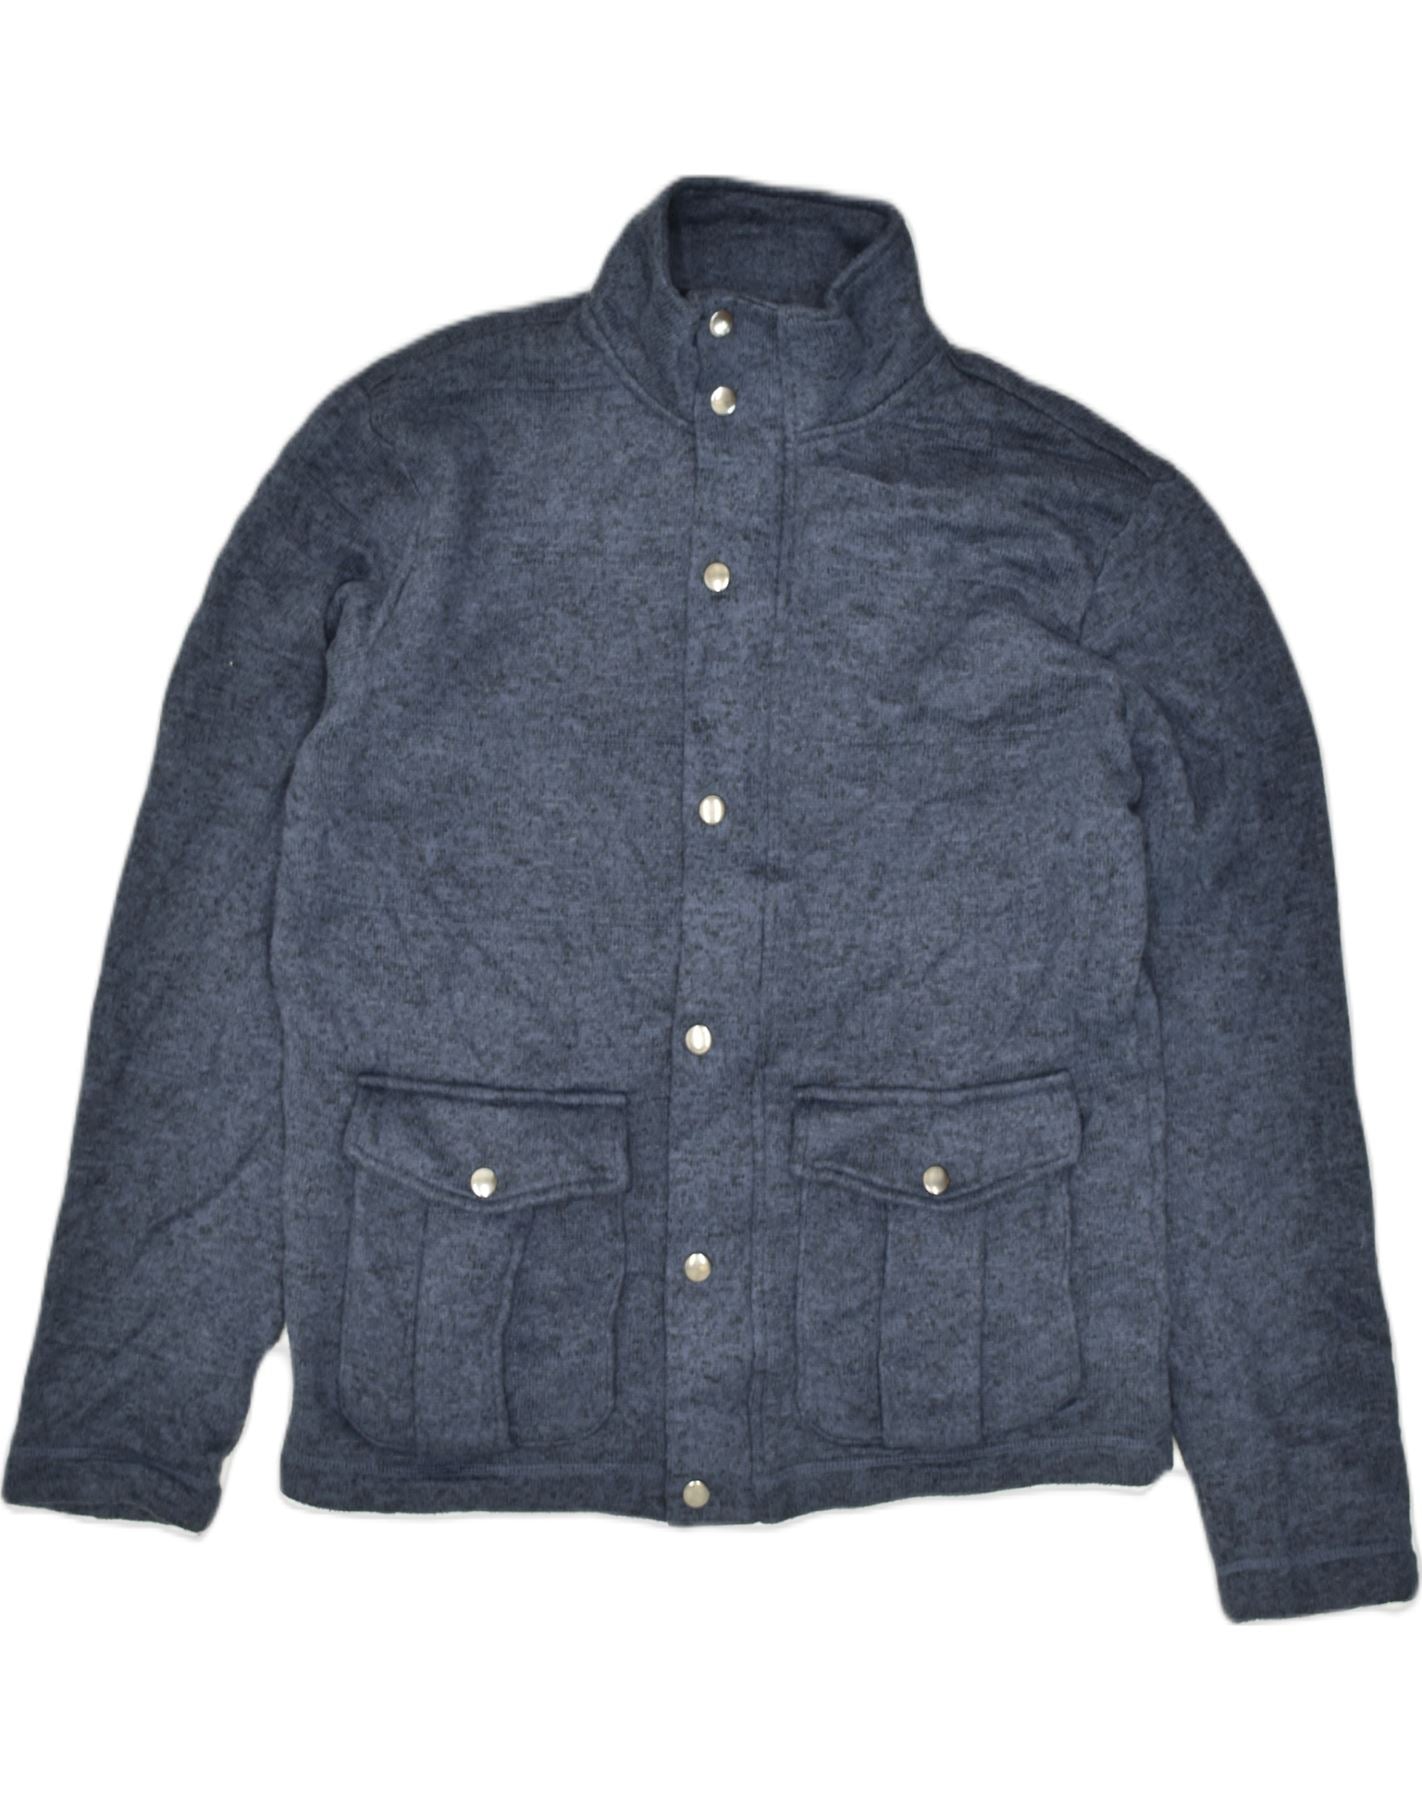 BANANA REPUBLIC Mens Bomber Jacket UK 38 Medium Navy Blue Polyester, Vintage & Second-Hand Clothing Online